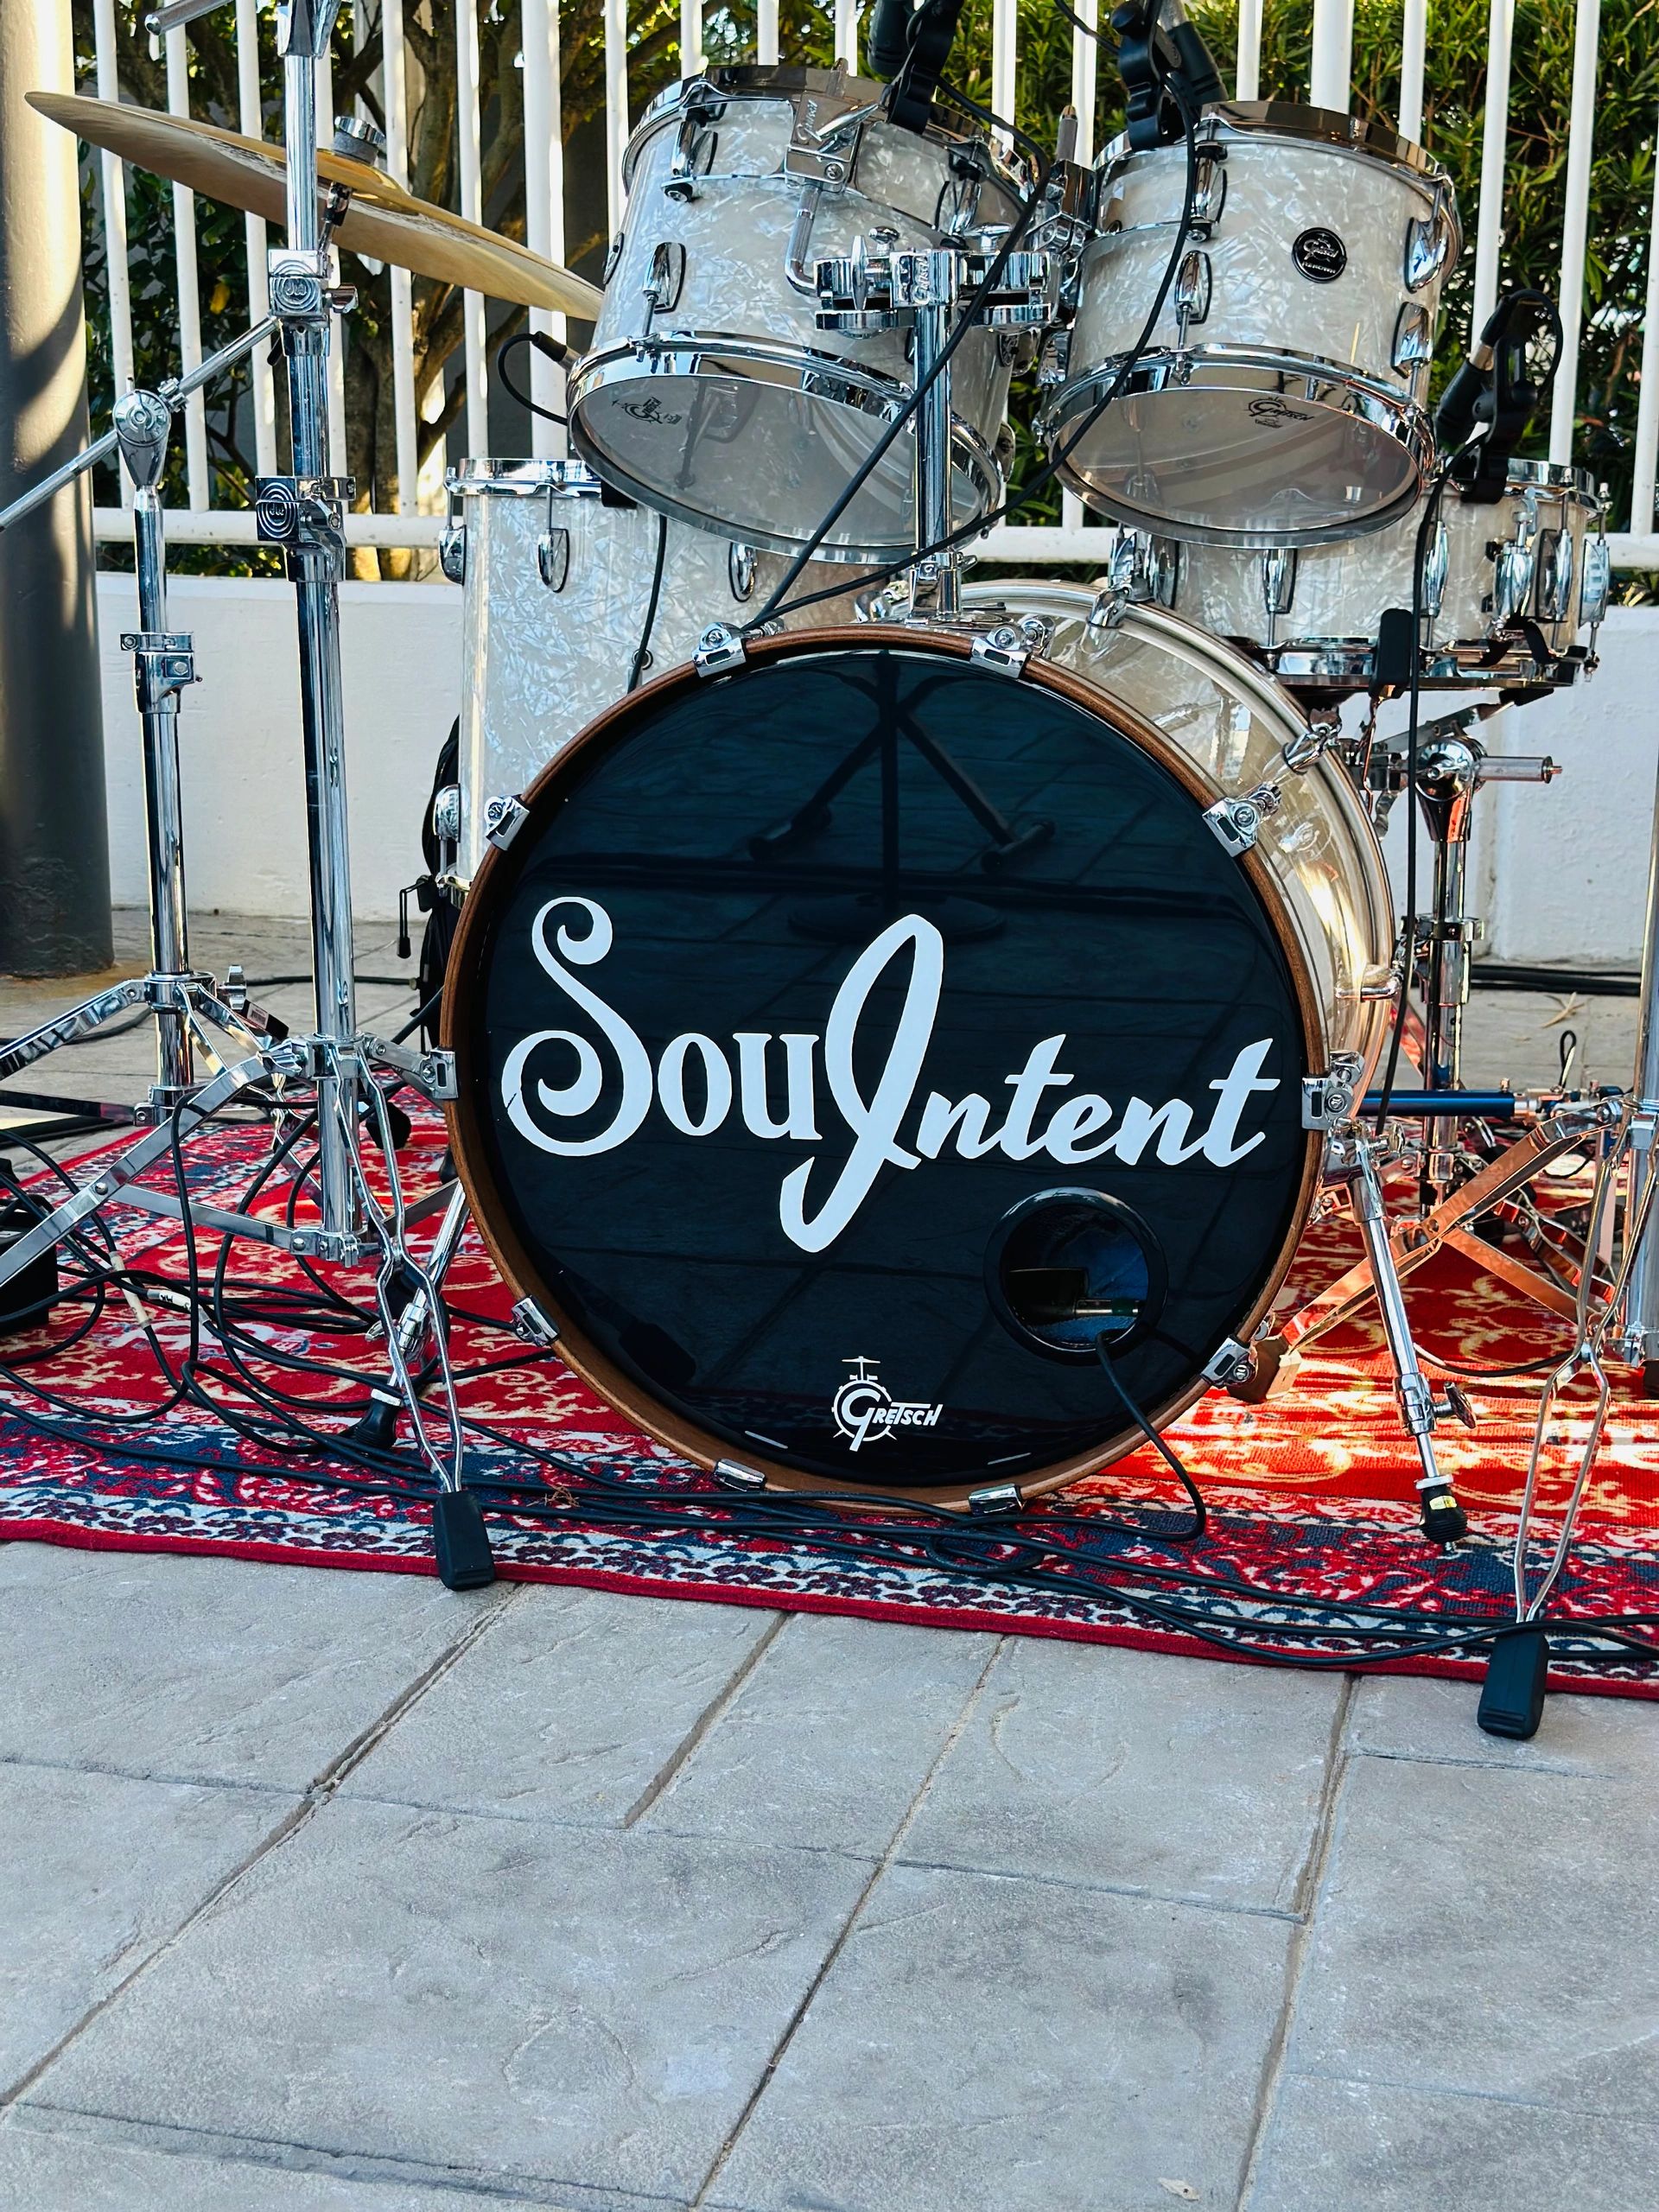 Band Soul Intent